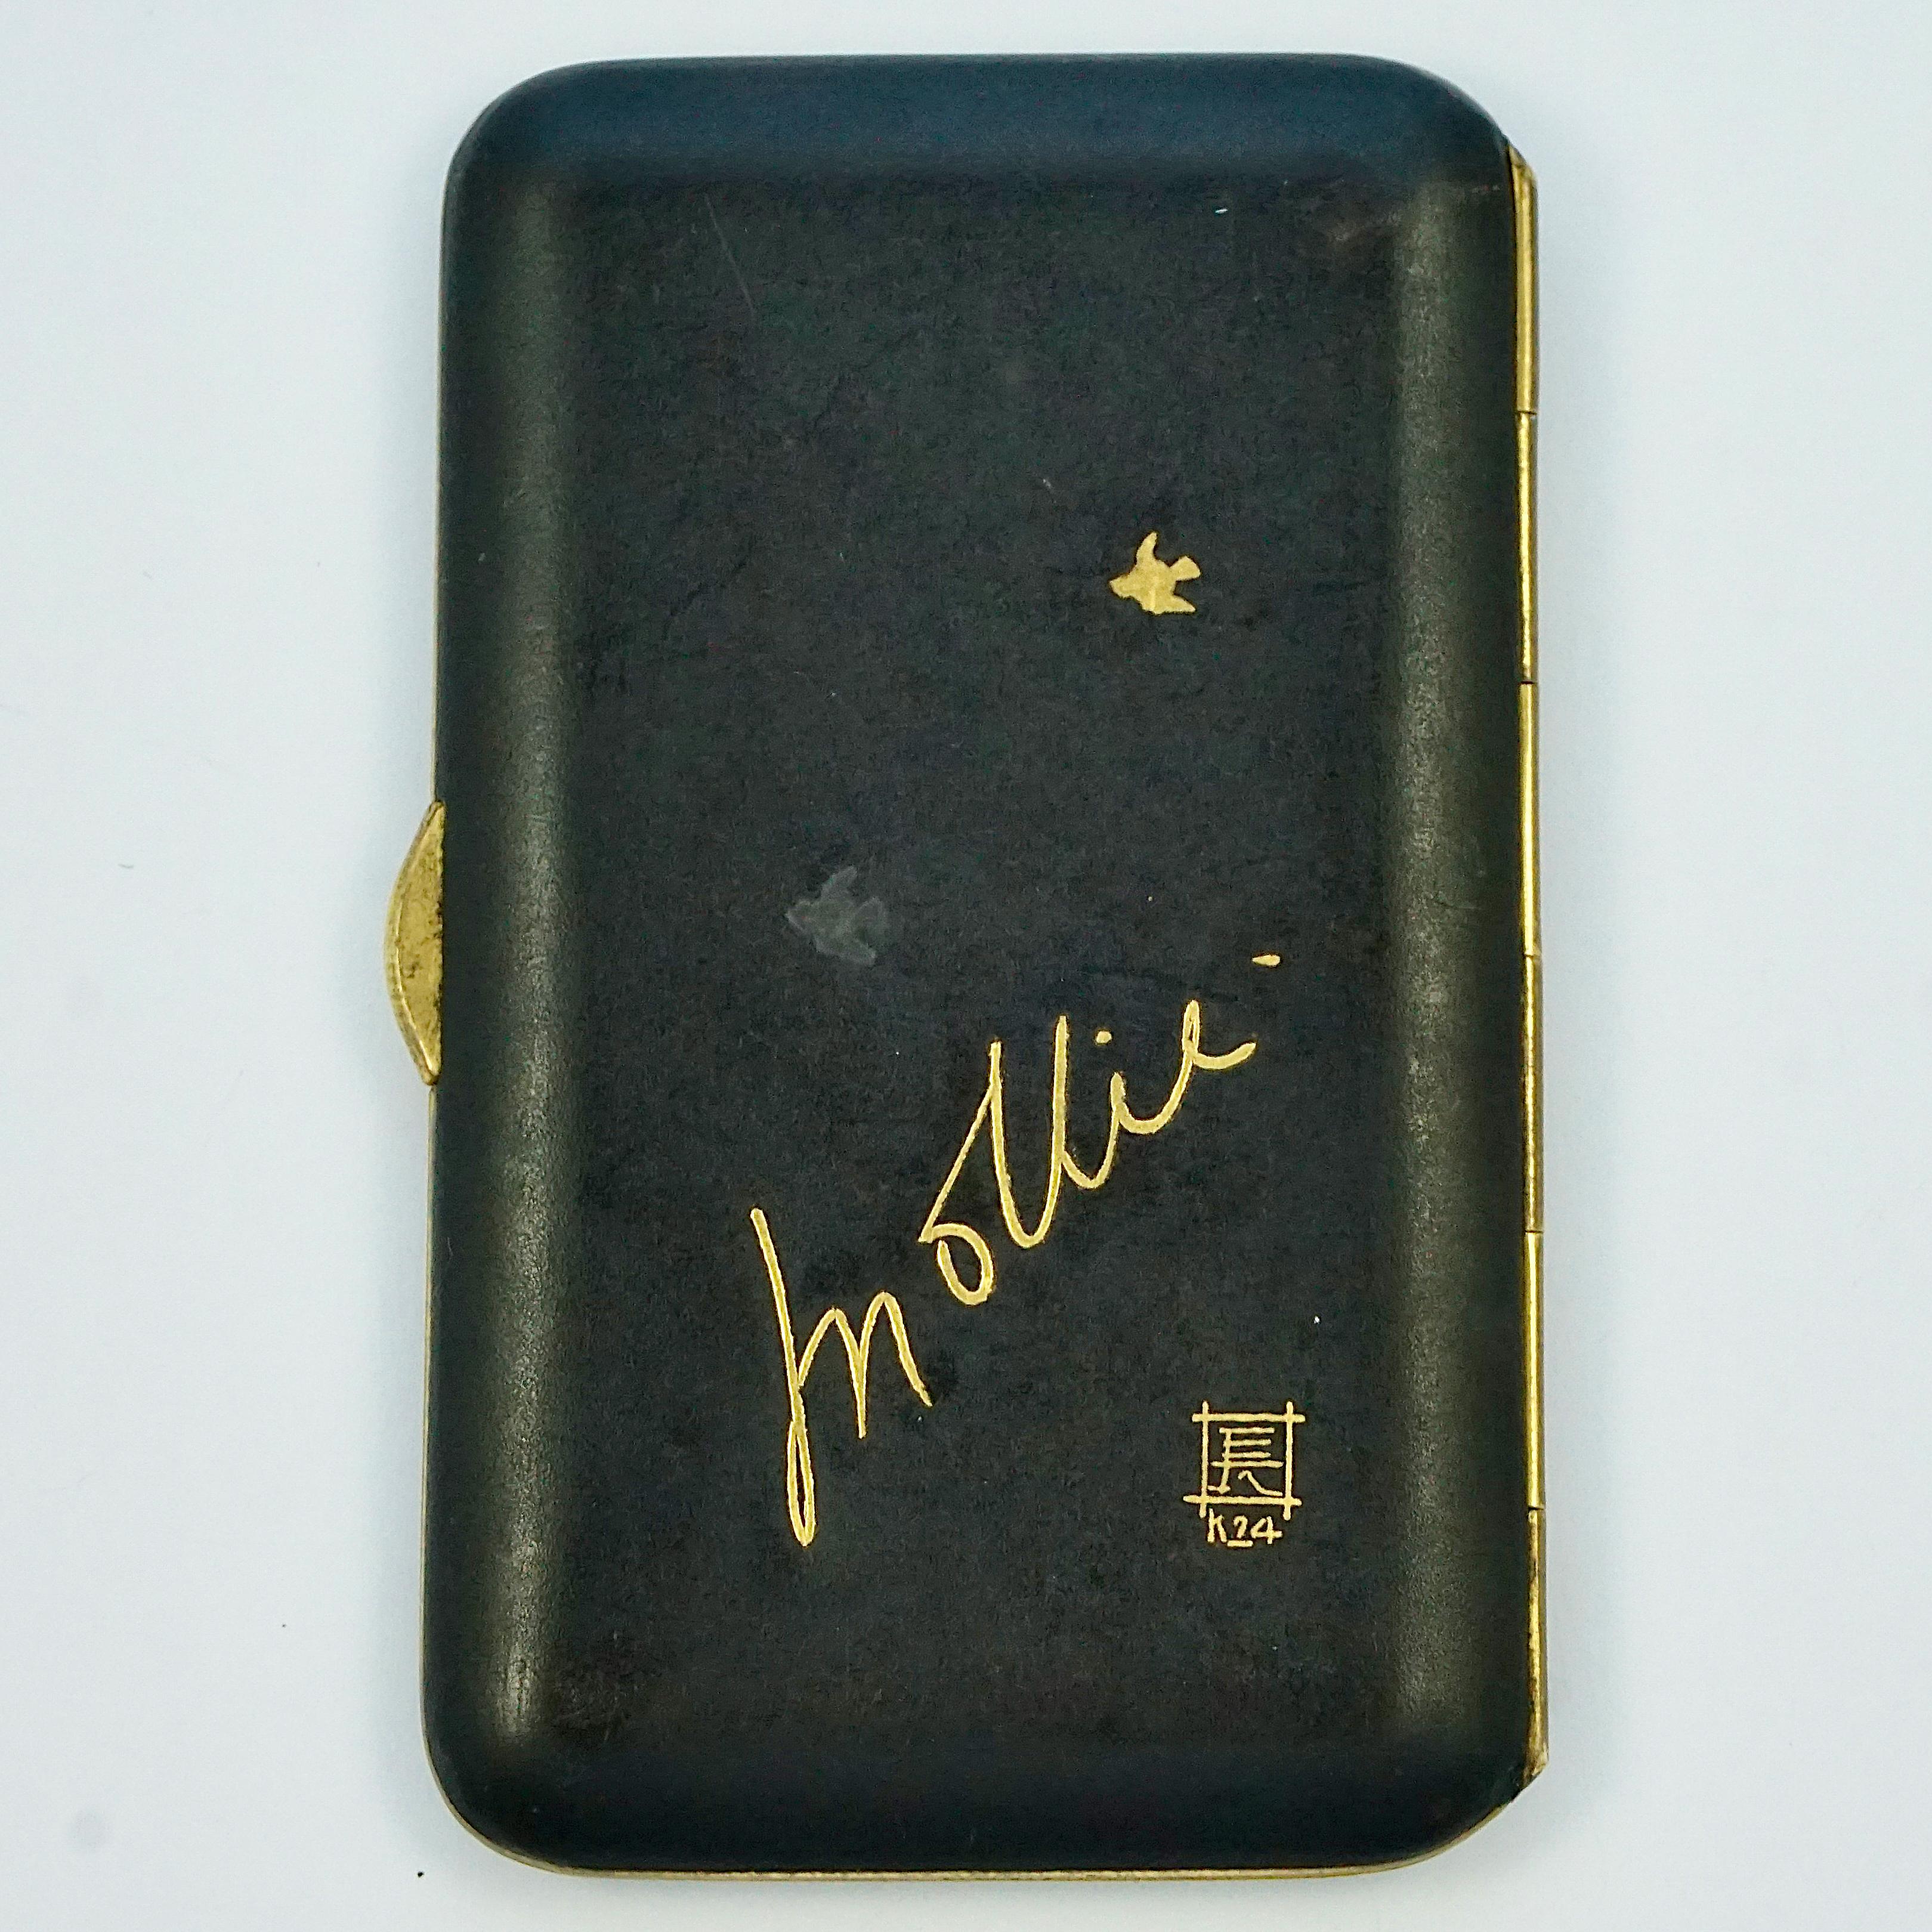 Japanese Mount Fuji K24 Gold Silver Damascene Cigarette Case In Good Condition For Sale In London, GB